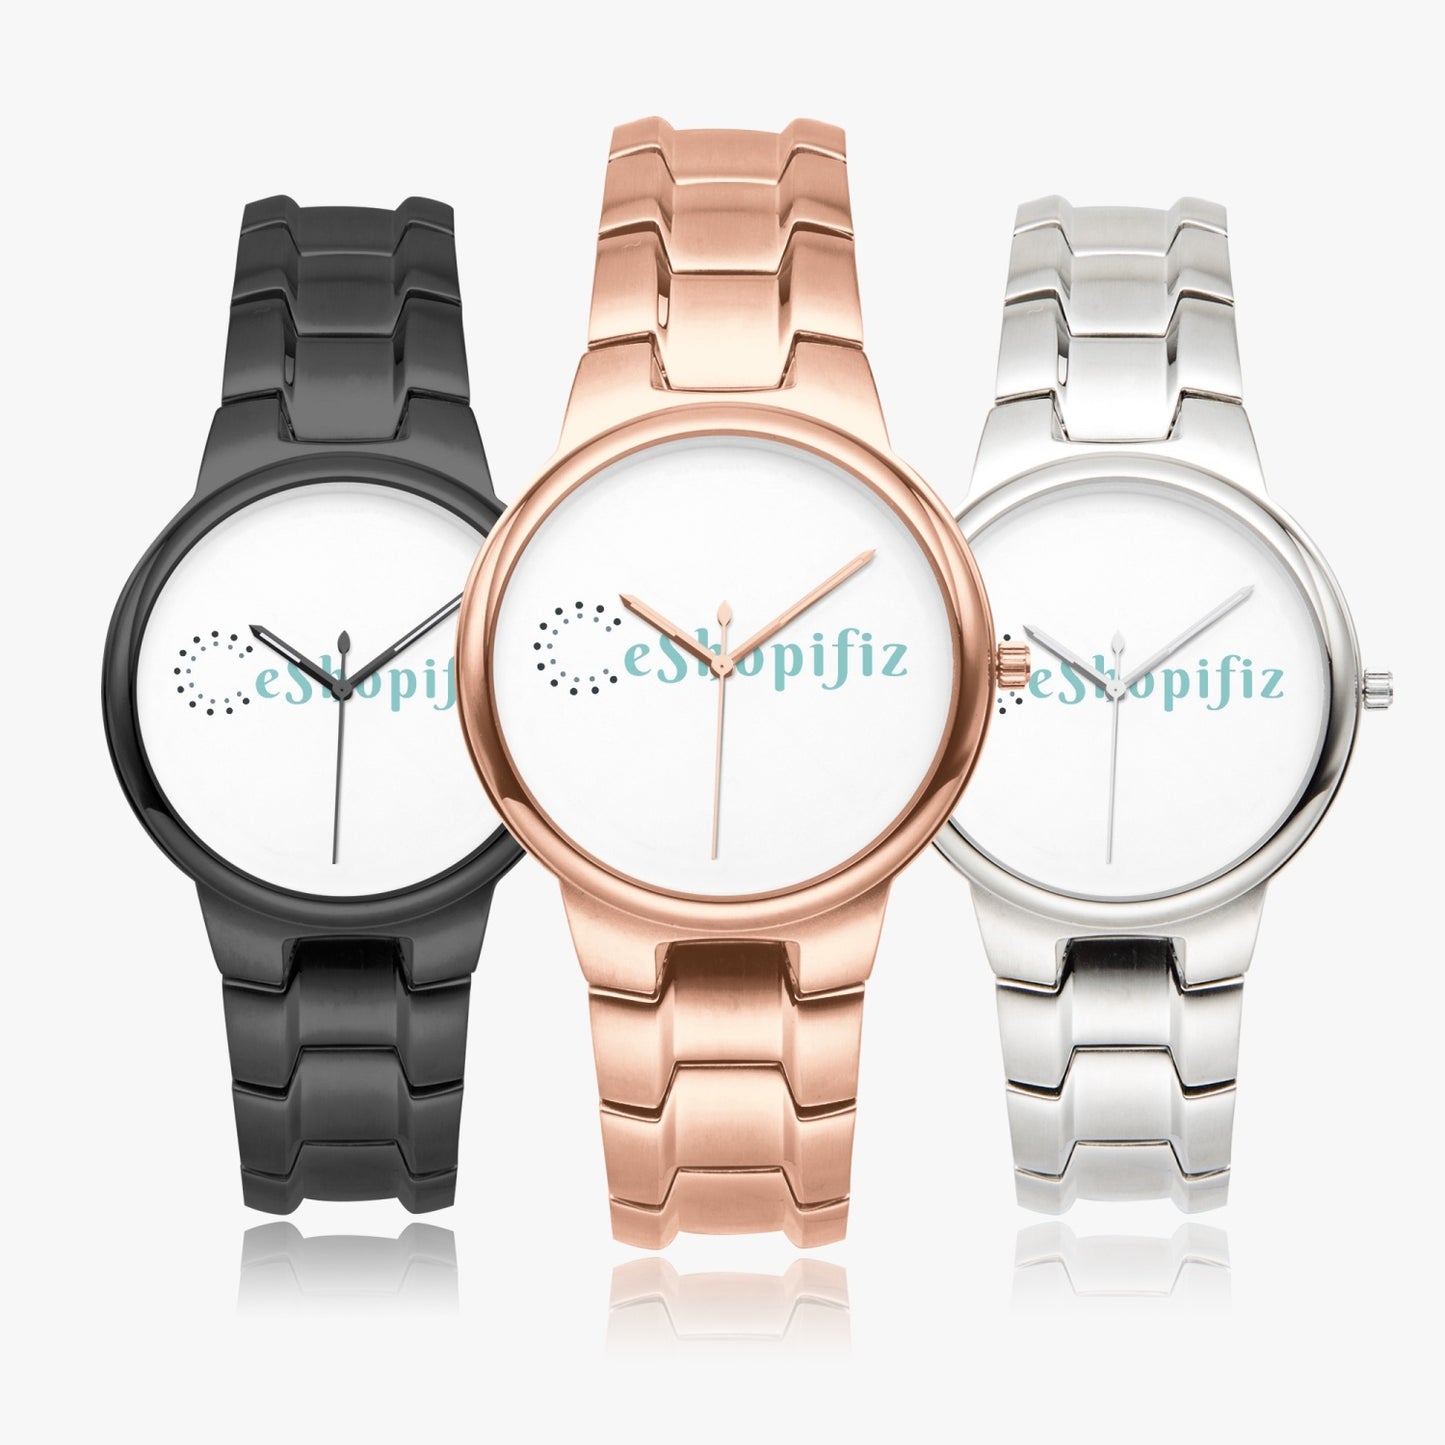 Exclusive ESHOPIFIZ Stainless Steel Quartz Watch